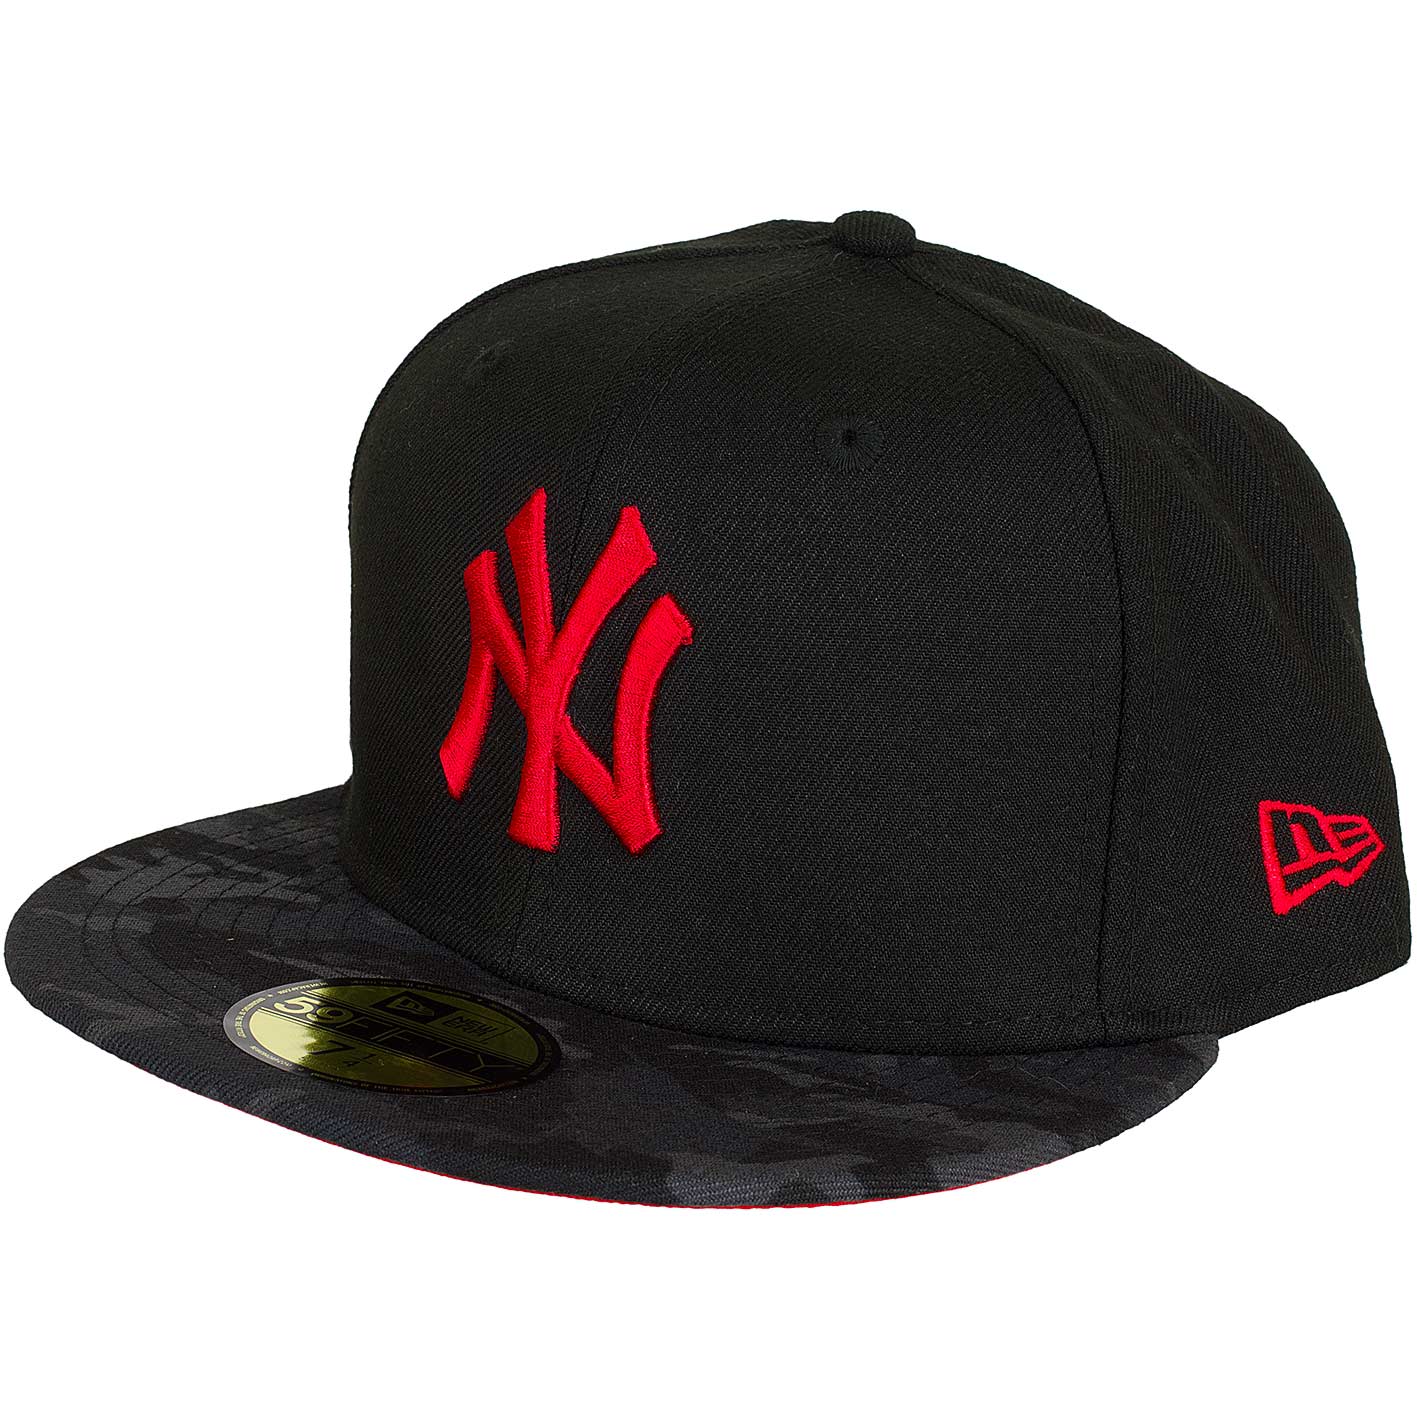 ☆ New Era 59Fifty Fitted Cap Contrast Camo NY Yankees schwarz/camo/rot -  hier bestellen!